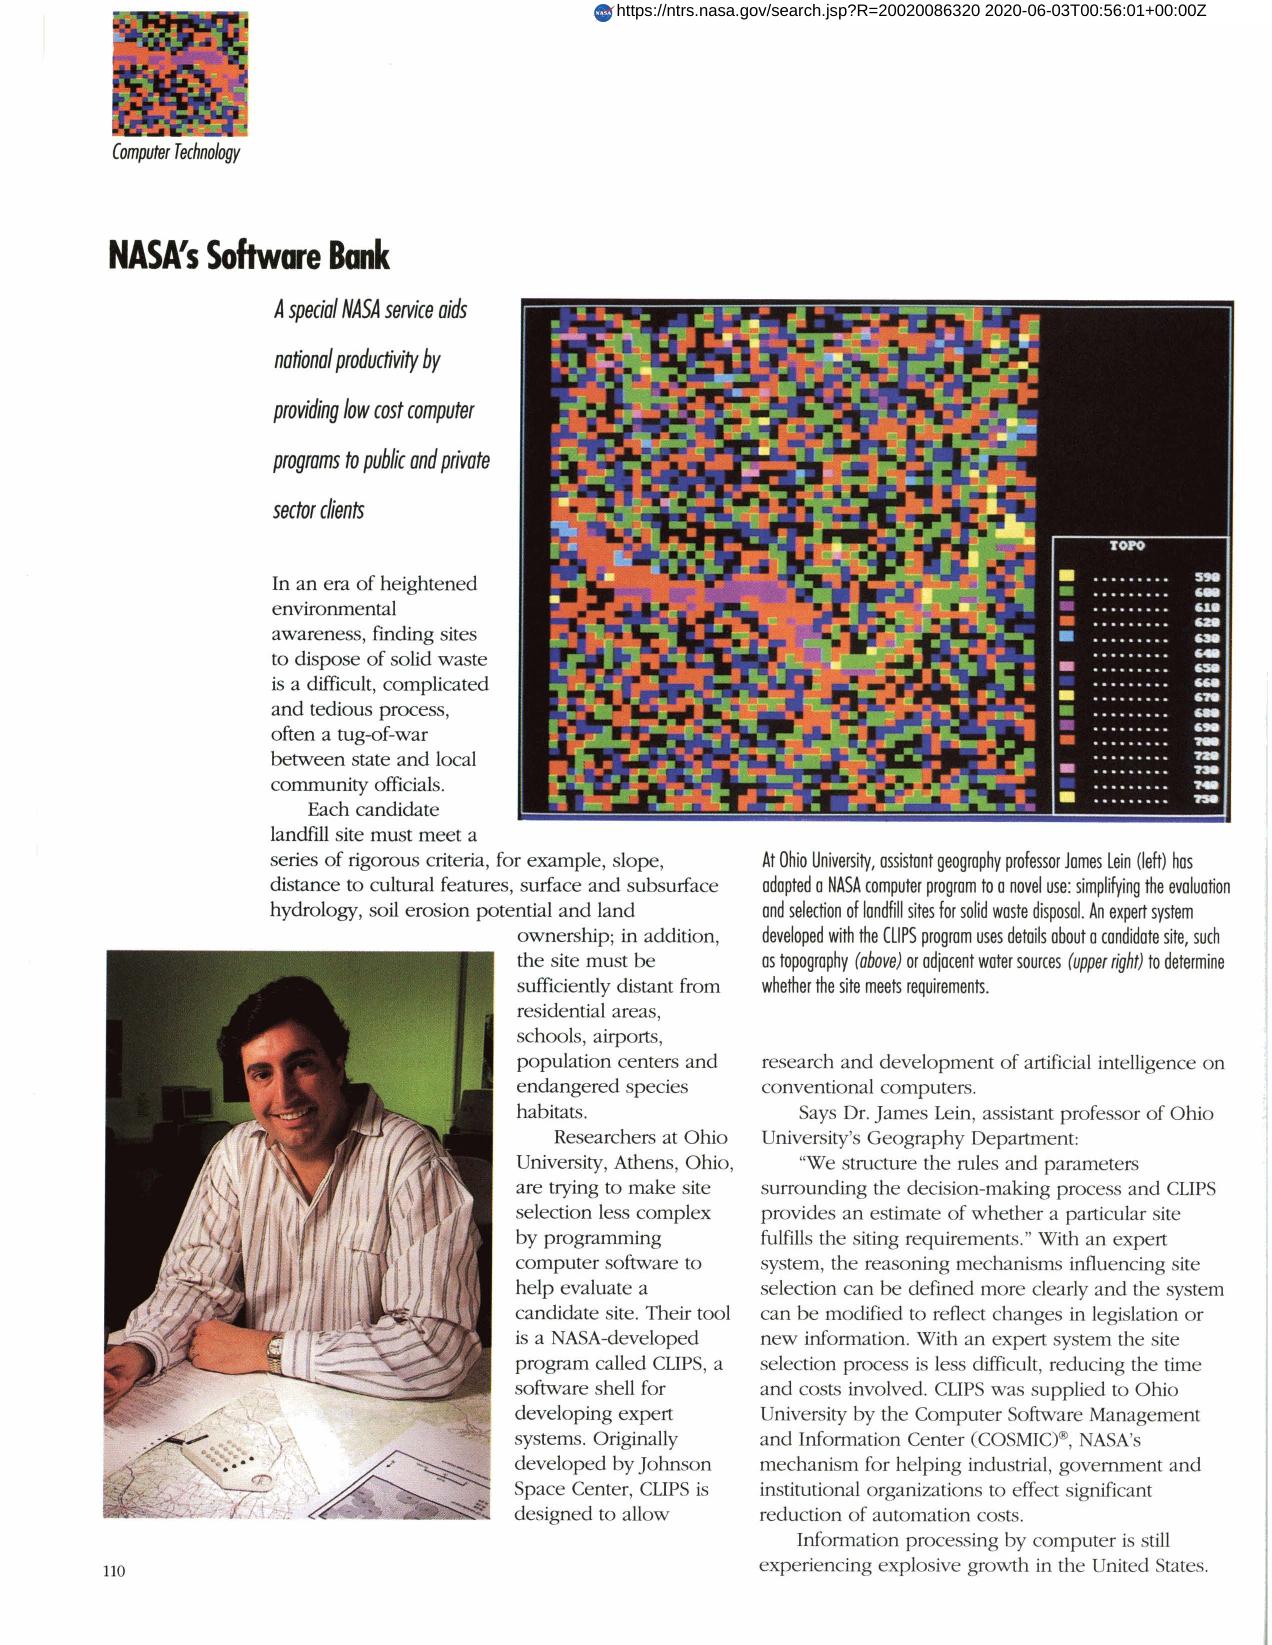 NASA's Software Bank (ASAP)